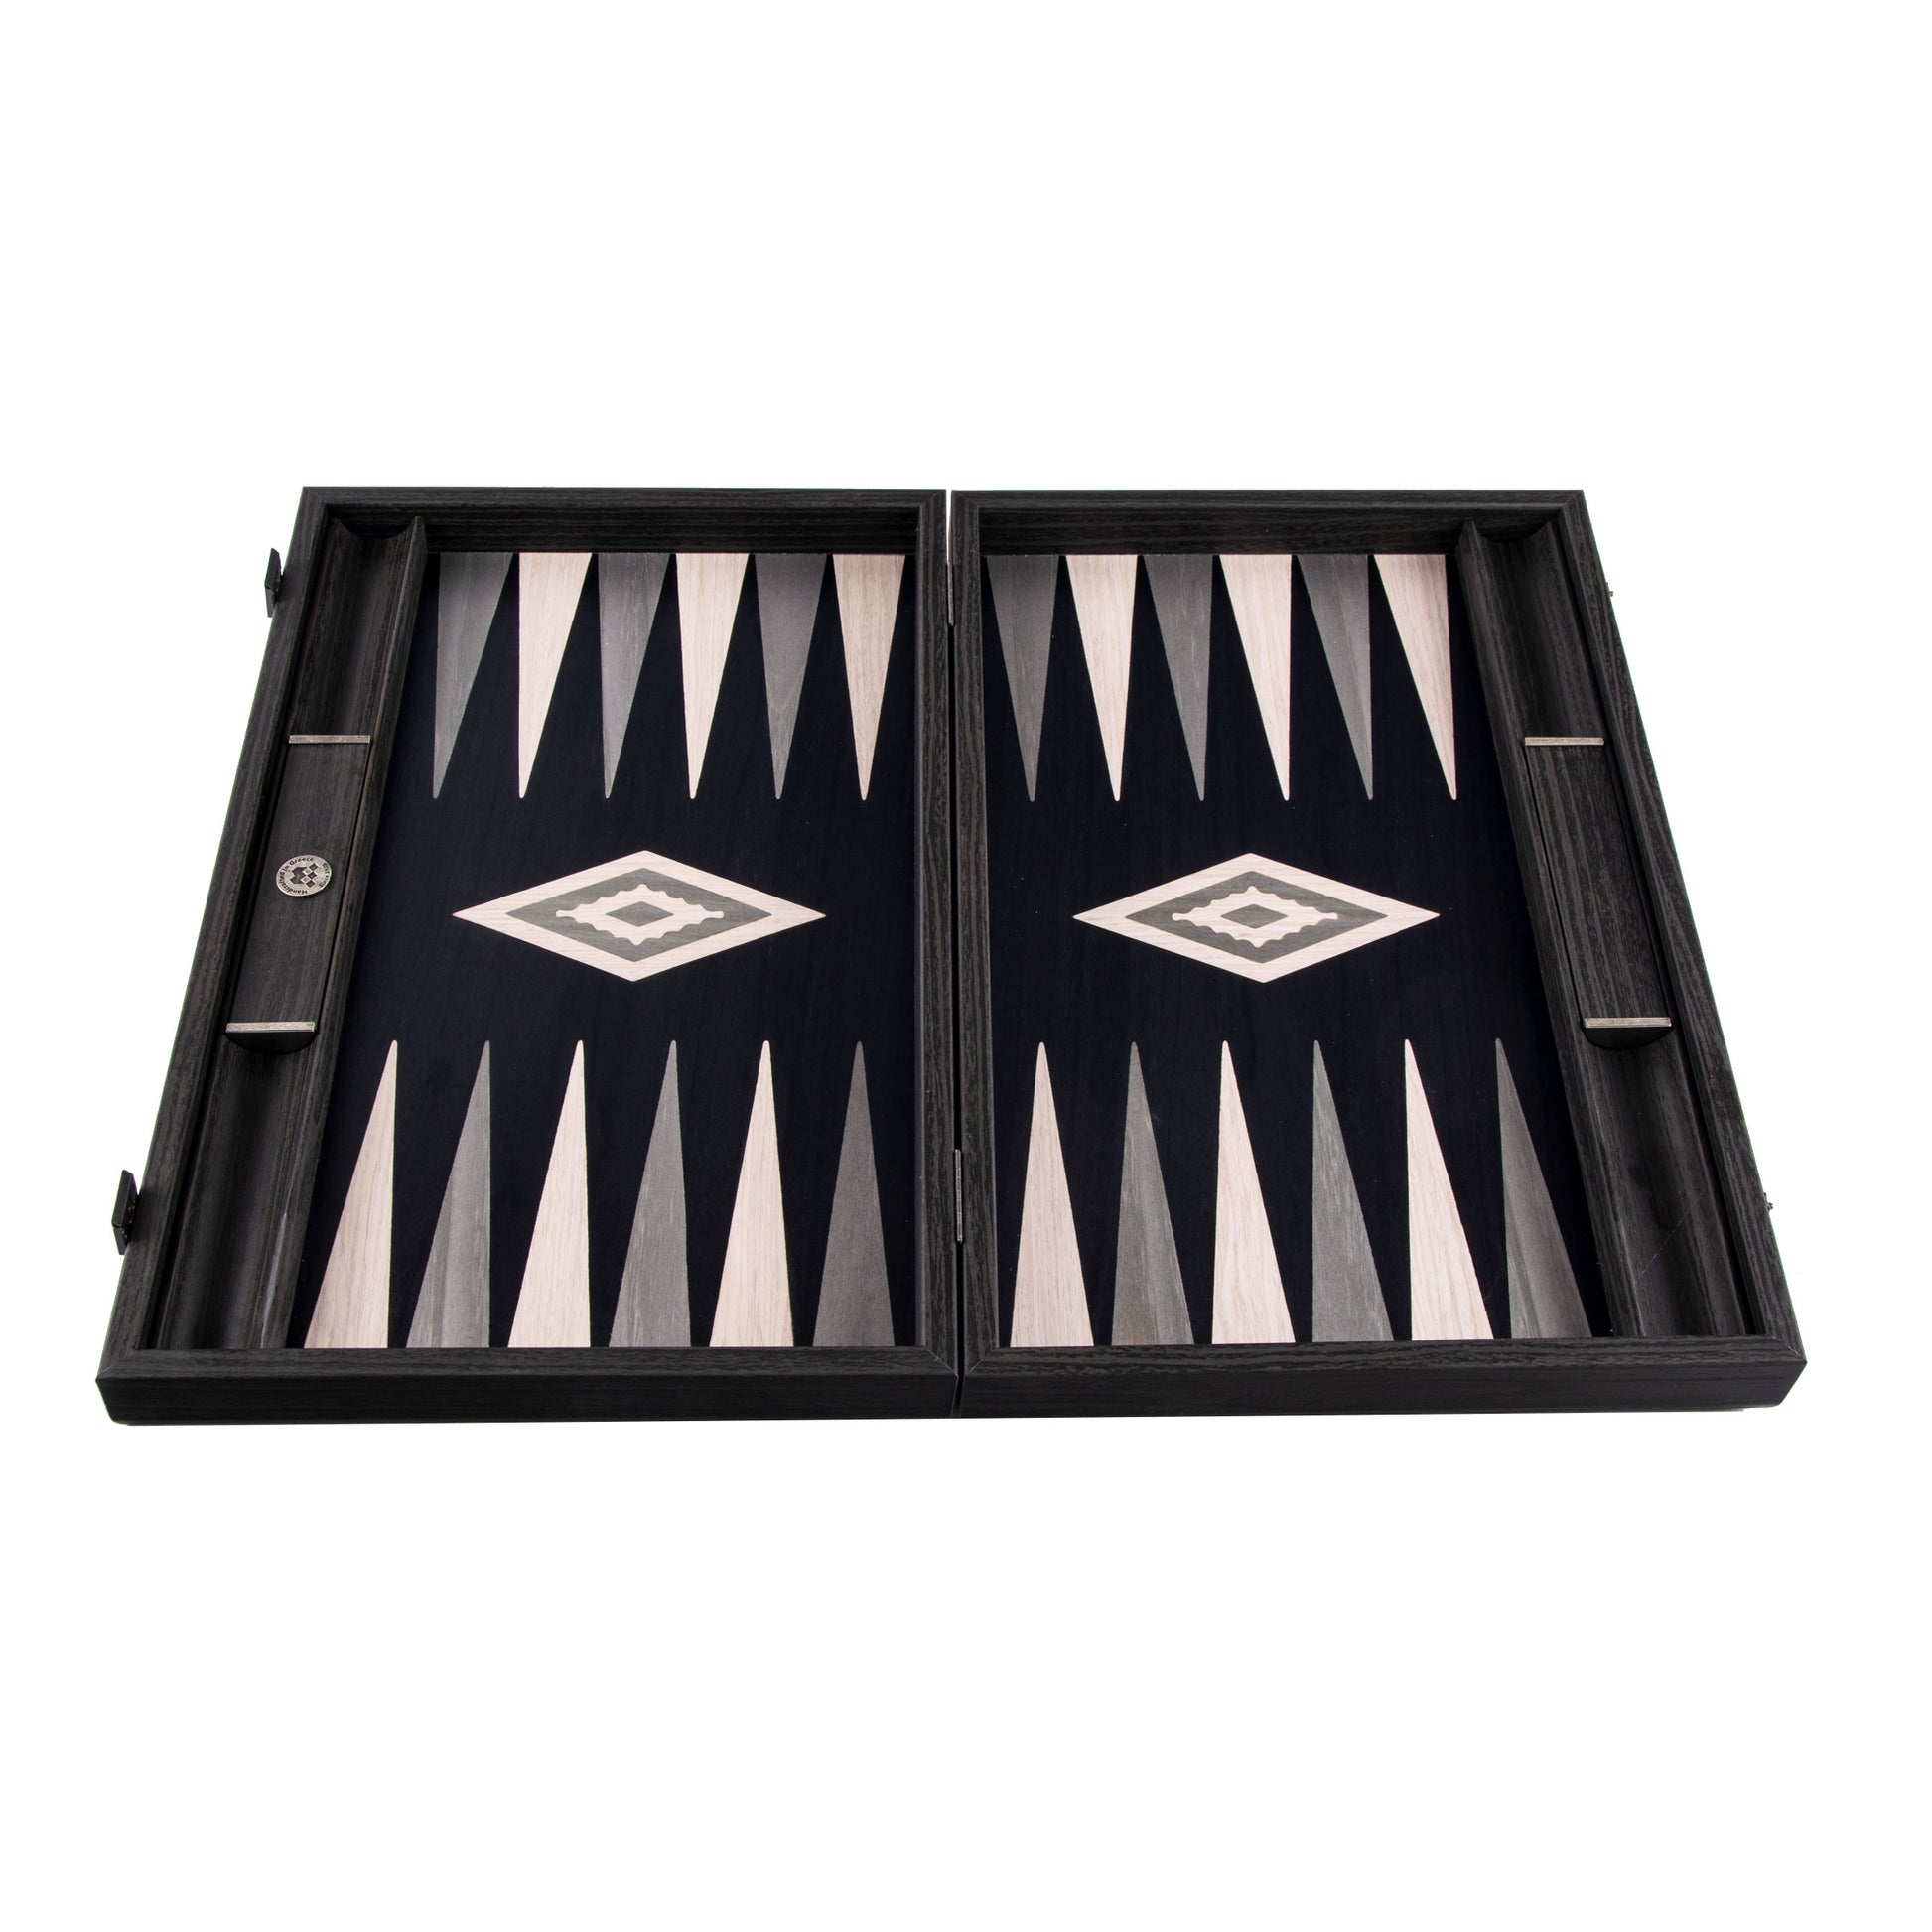 PEARLY GREY VAVONA Backgammon - Premium Backgammon from MANOPOULOS Chess & Backgammon - Just €144! Shop now at MANOPOULOS Chess & Backgammon